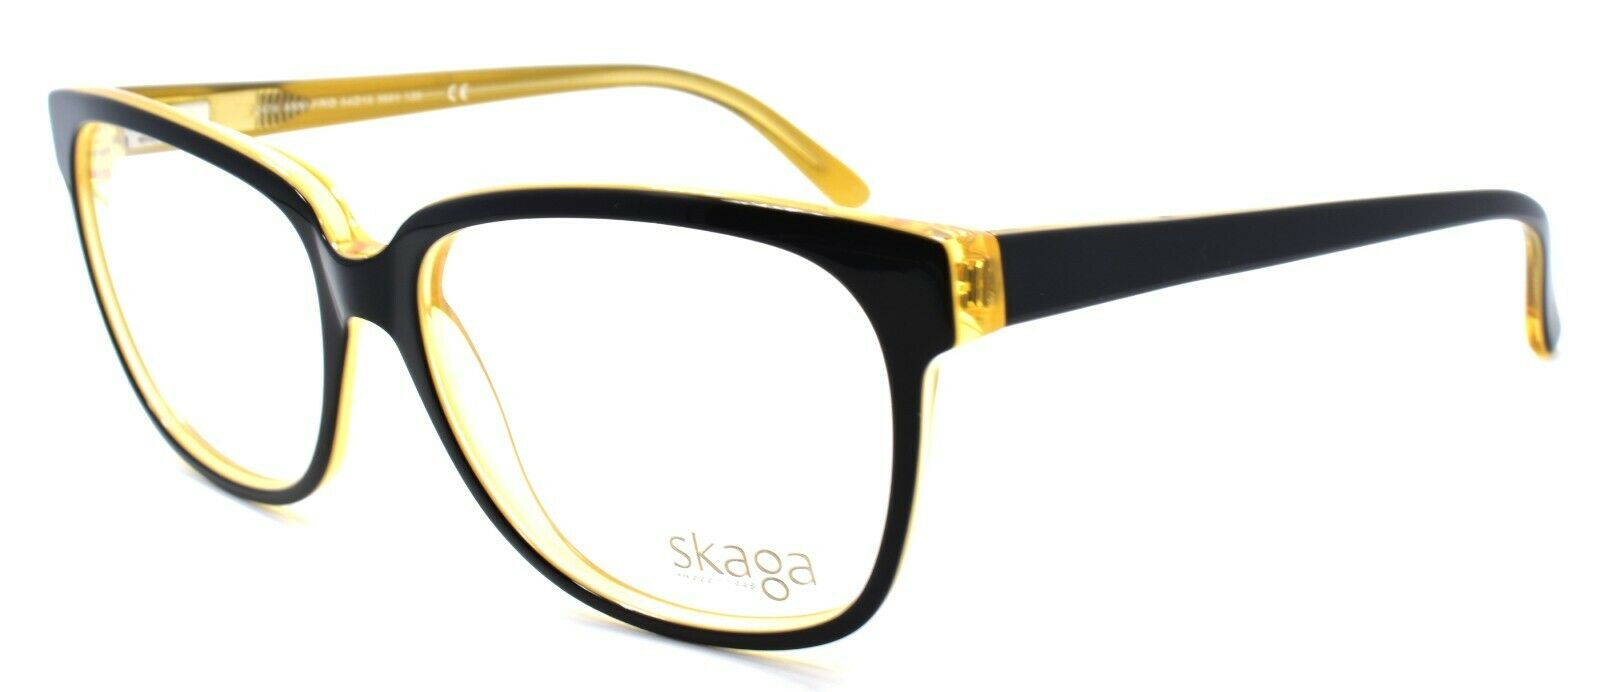 1-Skaga 2474 Anni-Frid 9501 Women's Eyeglasses Frames 54-15-135 Black / Gold-IKSpecs